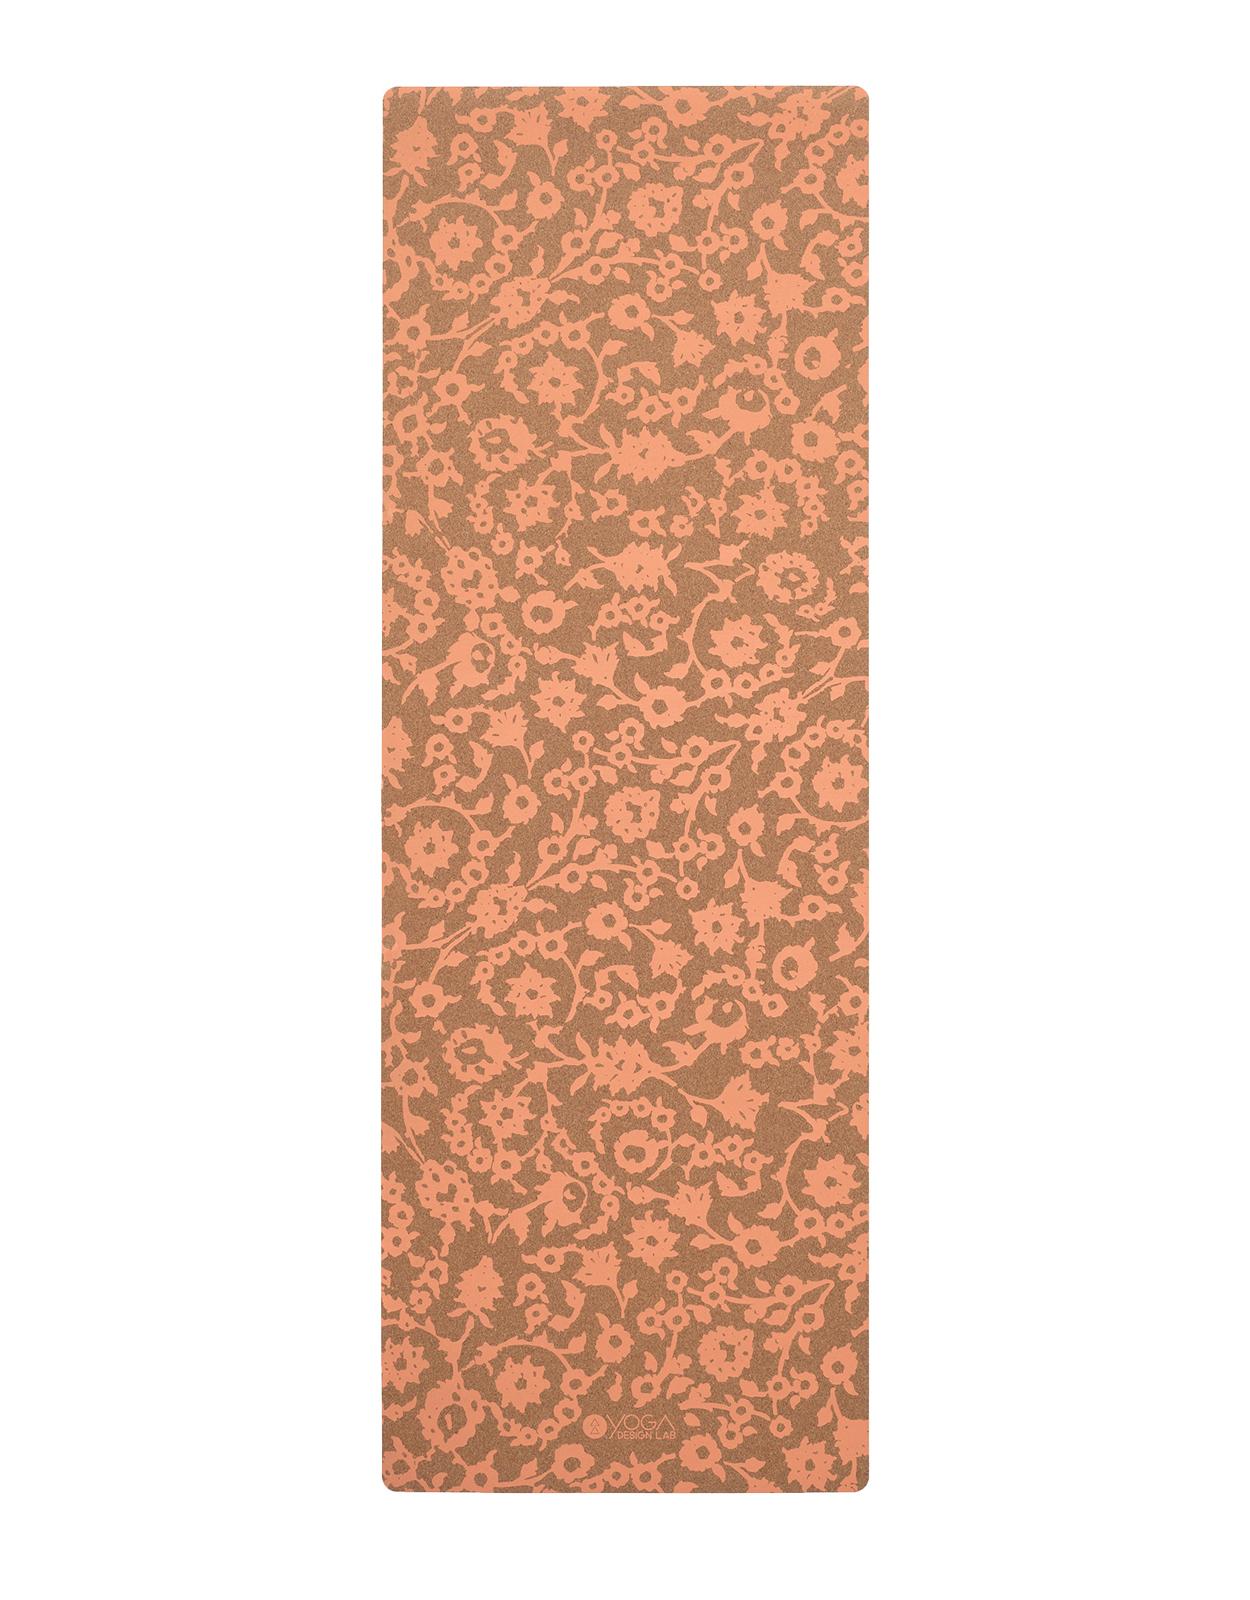 3.5mm Cork Yoga Mat - Floral Batik Coral